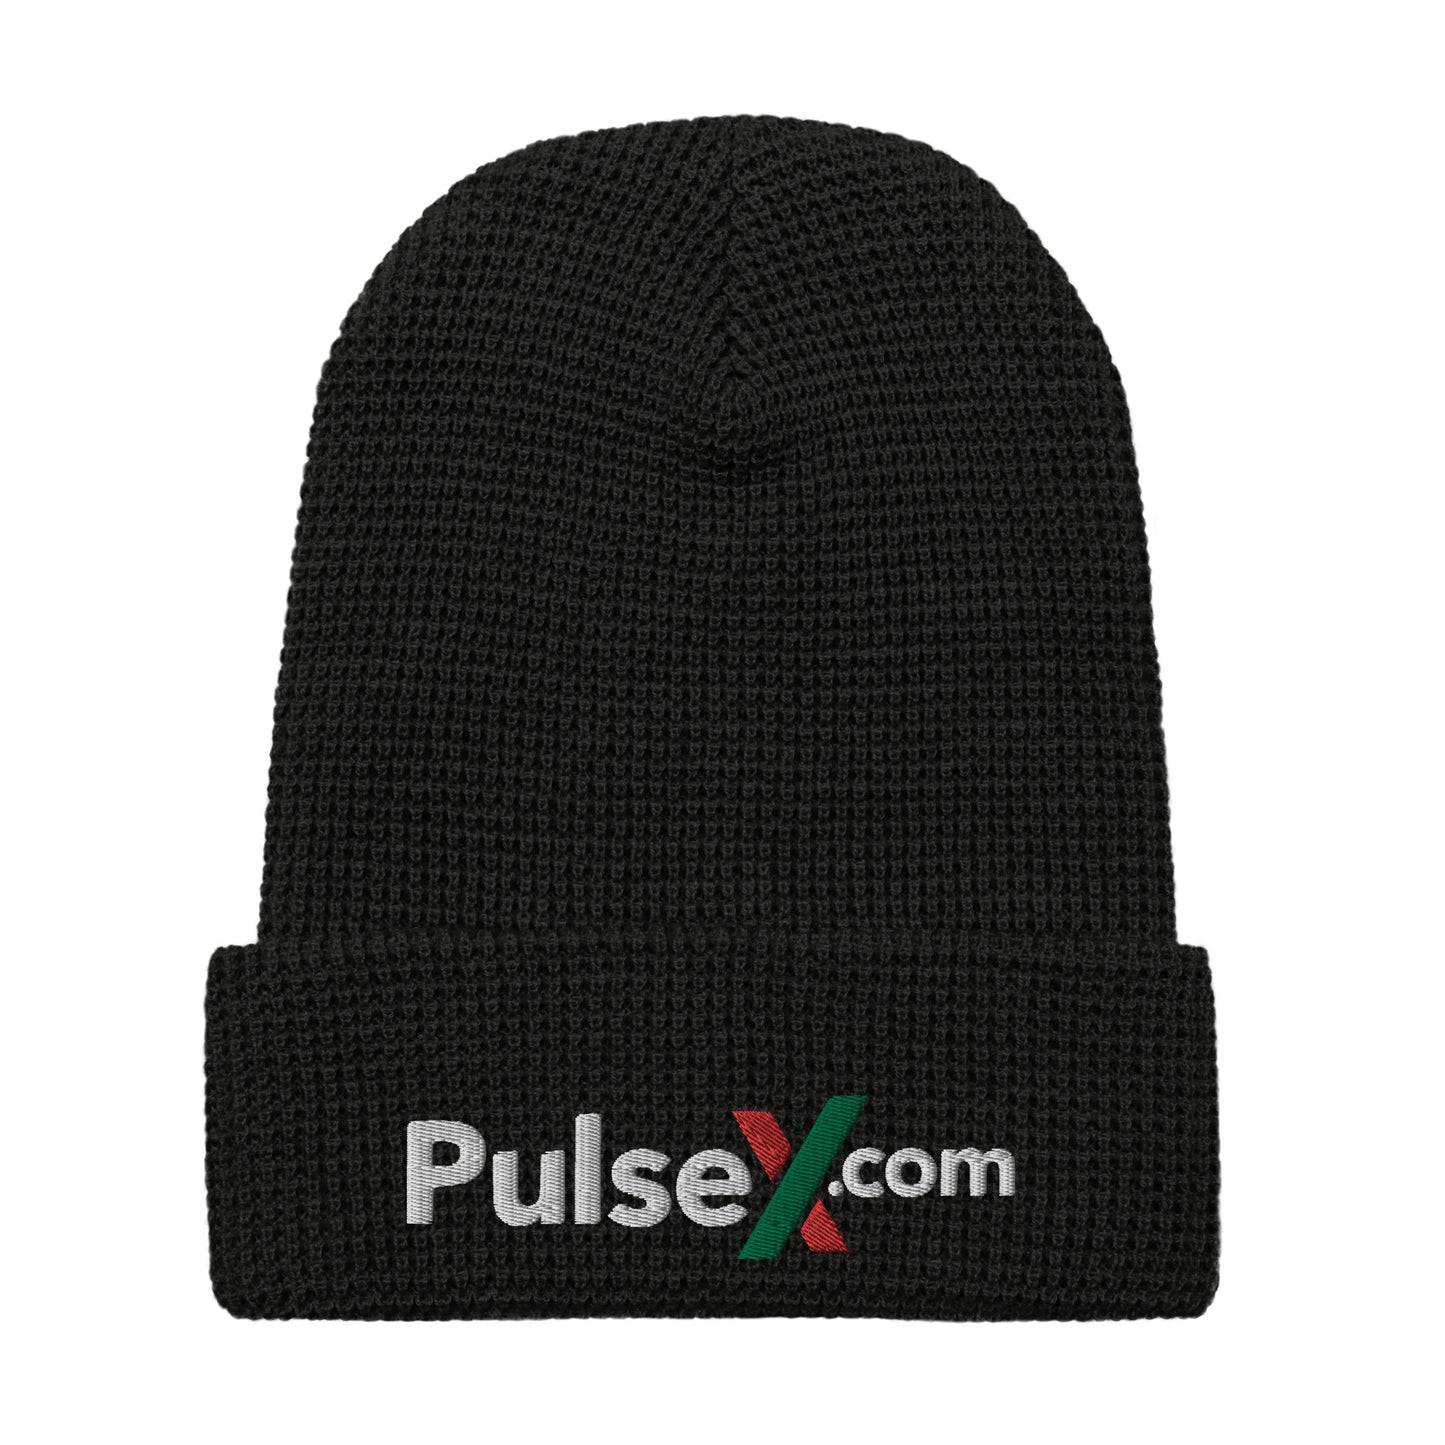 PulseX.com Waffle Beanie